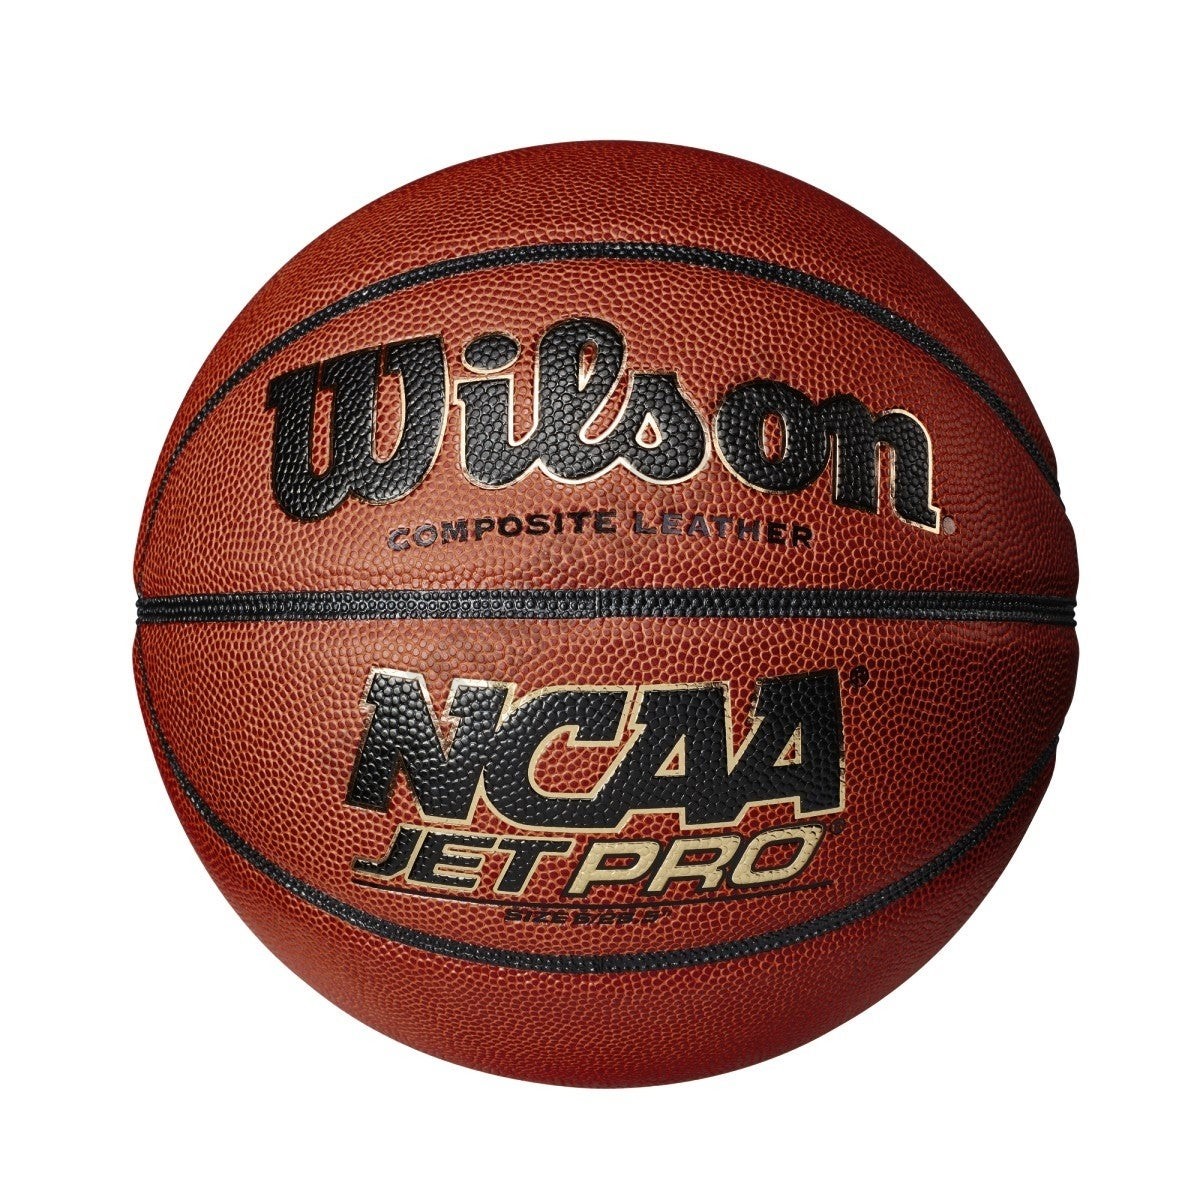 NCAA Jet Pro Basketball - Wilson Discount Store - NCAA Jet Pro Basketball - Wilson Discount Store